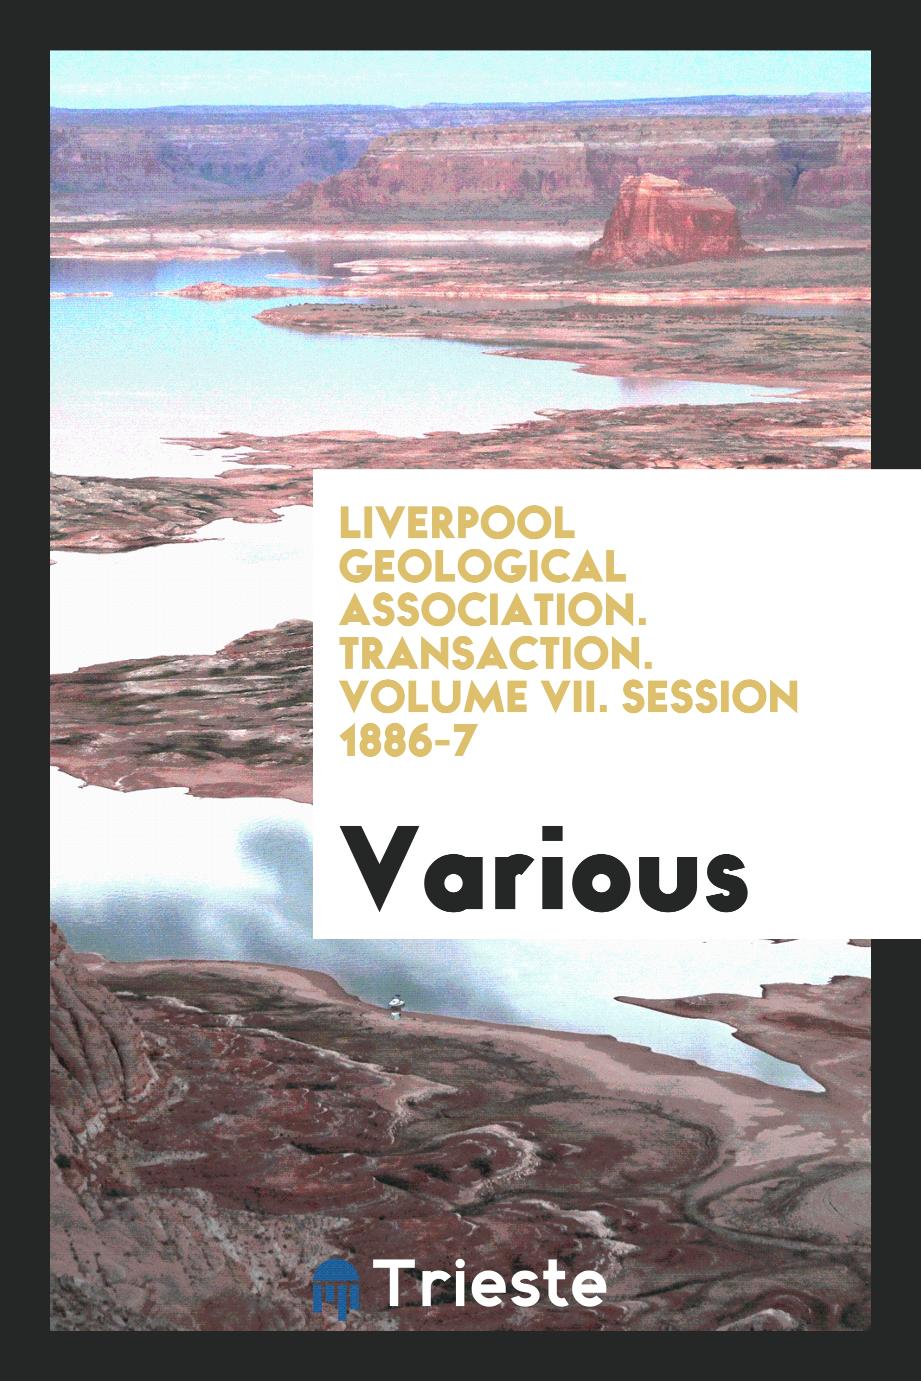 Liverpool Geological Association. Transaction. Volume VII. Session 1886-7